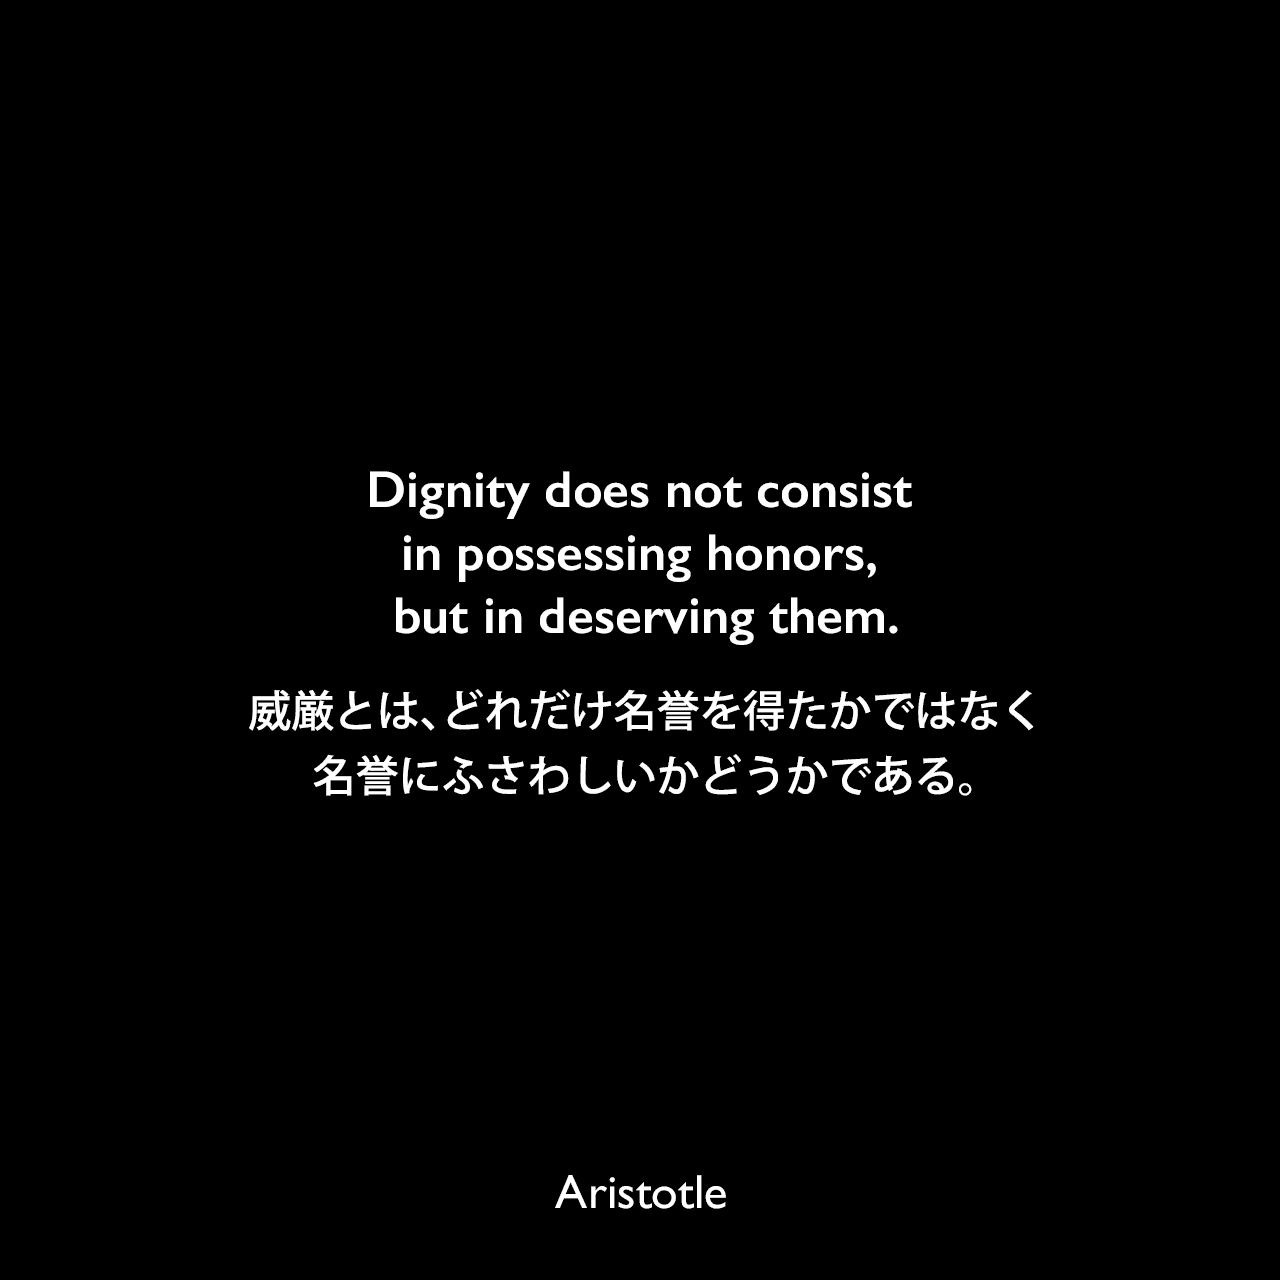 Dignity does not consist in possessing honors, but in deserving them.威厳とは、どれだけ名誉を得たかではなく、名誉にふさわしいかどうかである。Aristotle